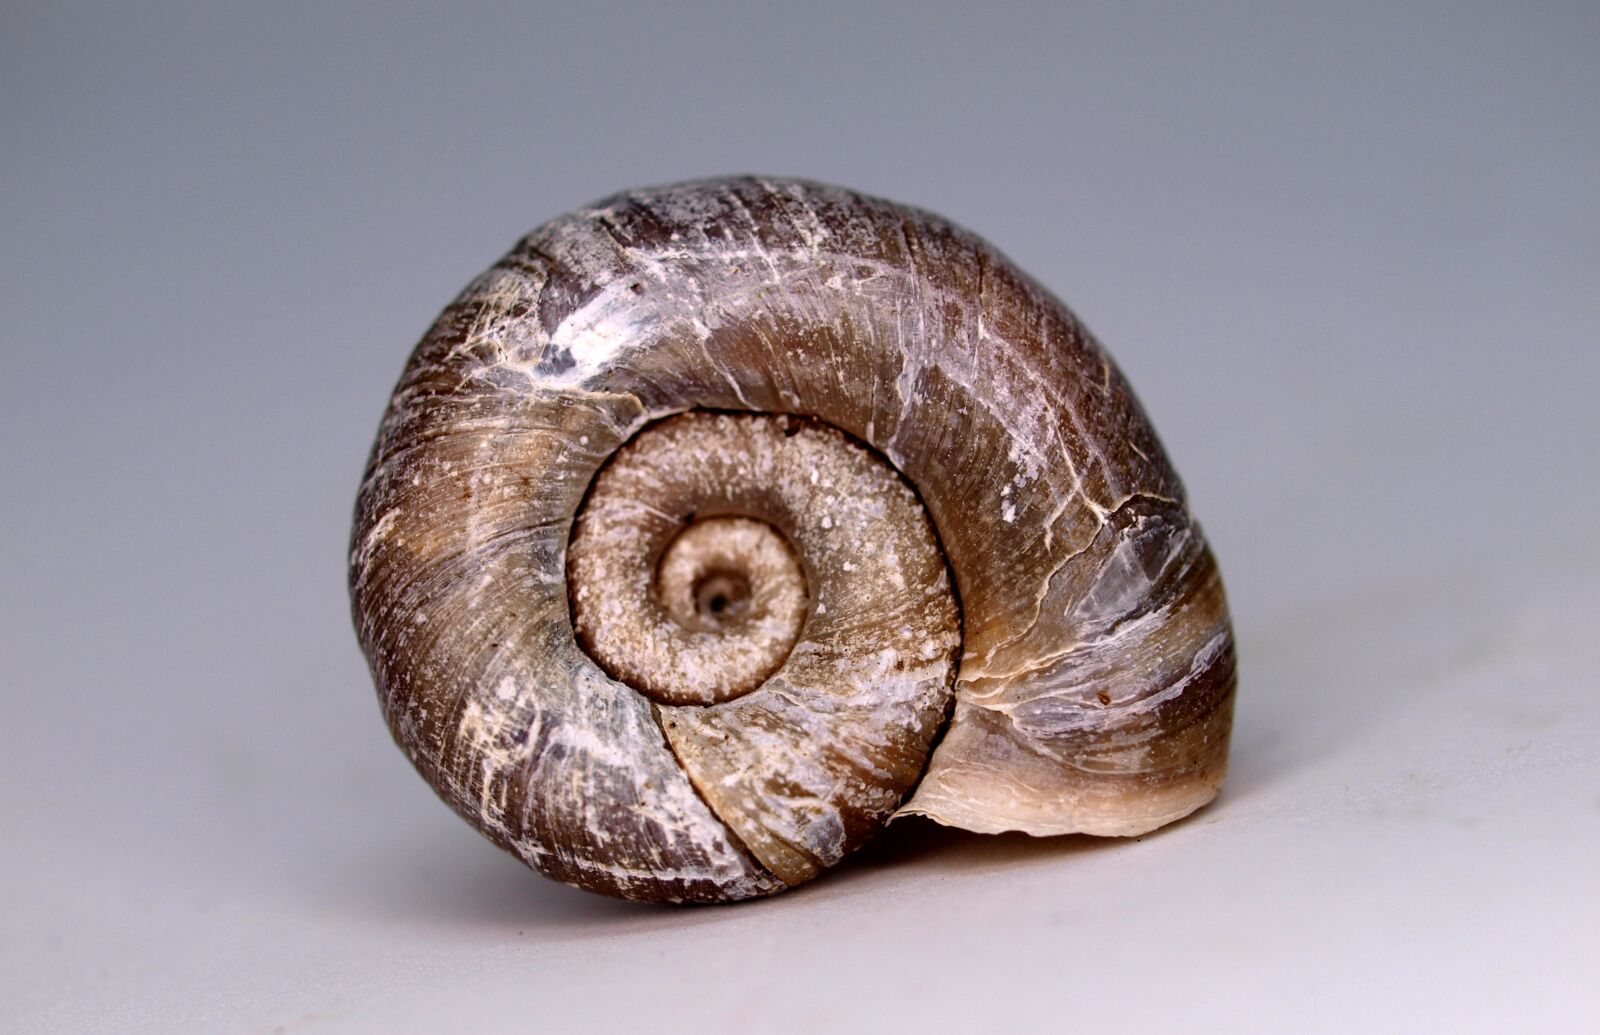 OLYMPUS 35mm Lens sample photo. Shellfish, invertebrate, snail photography